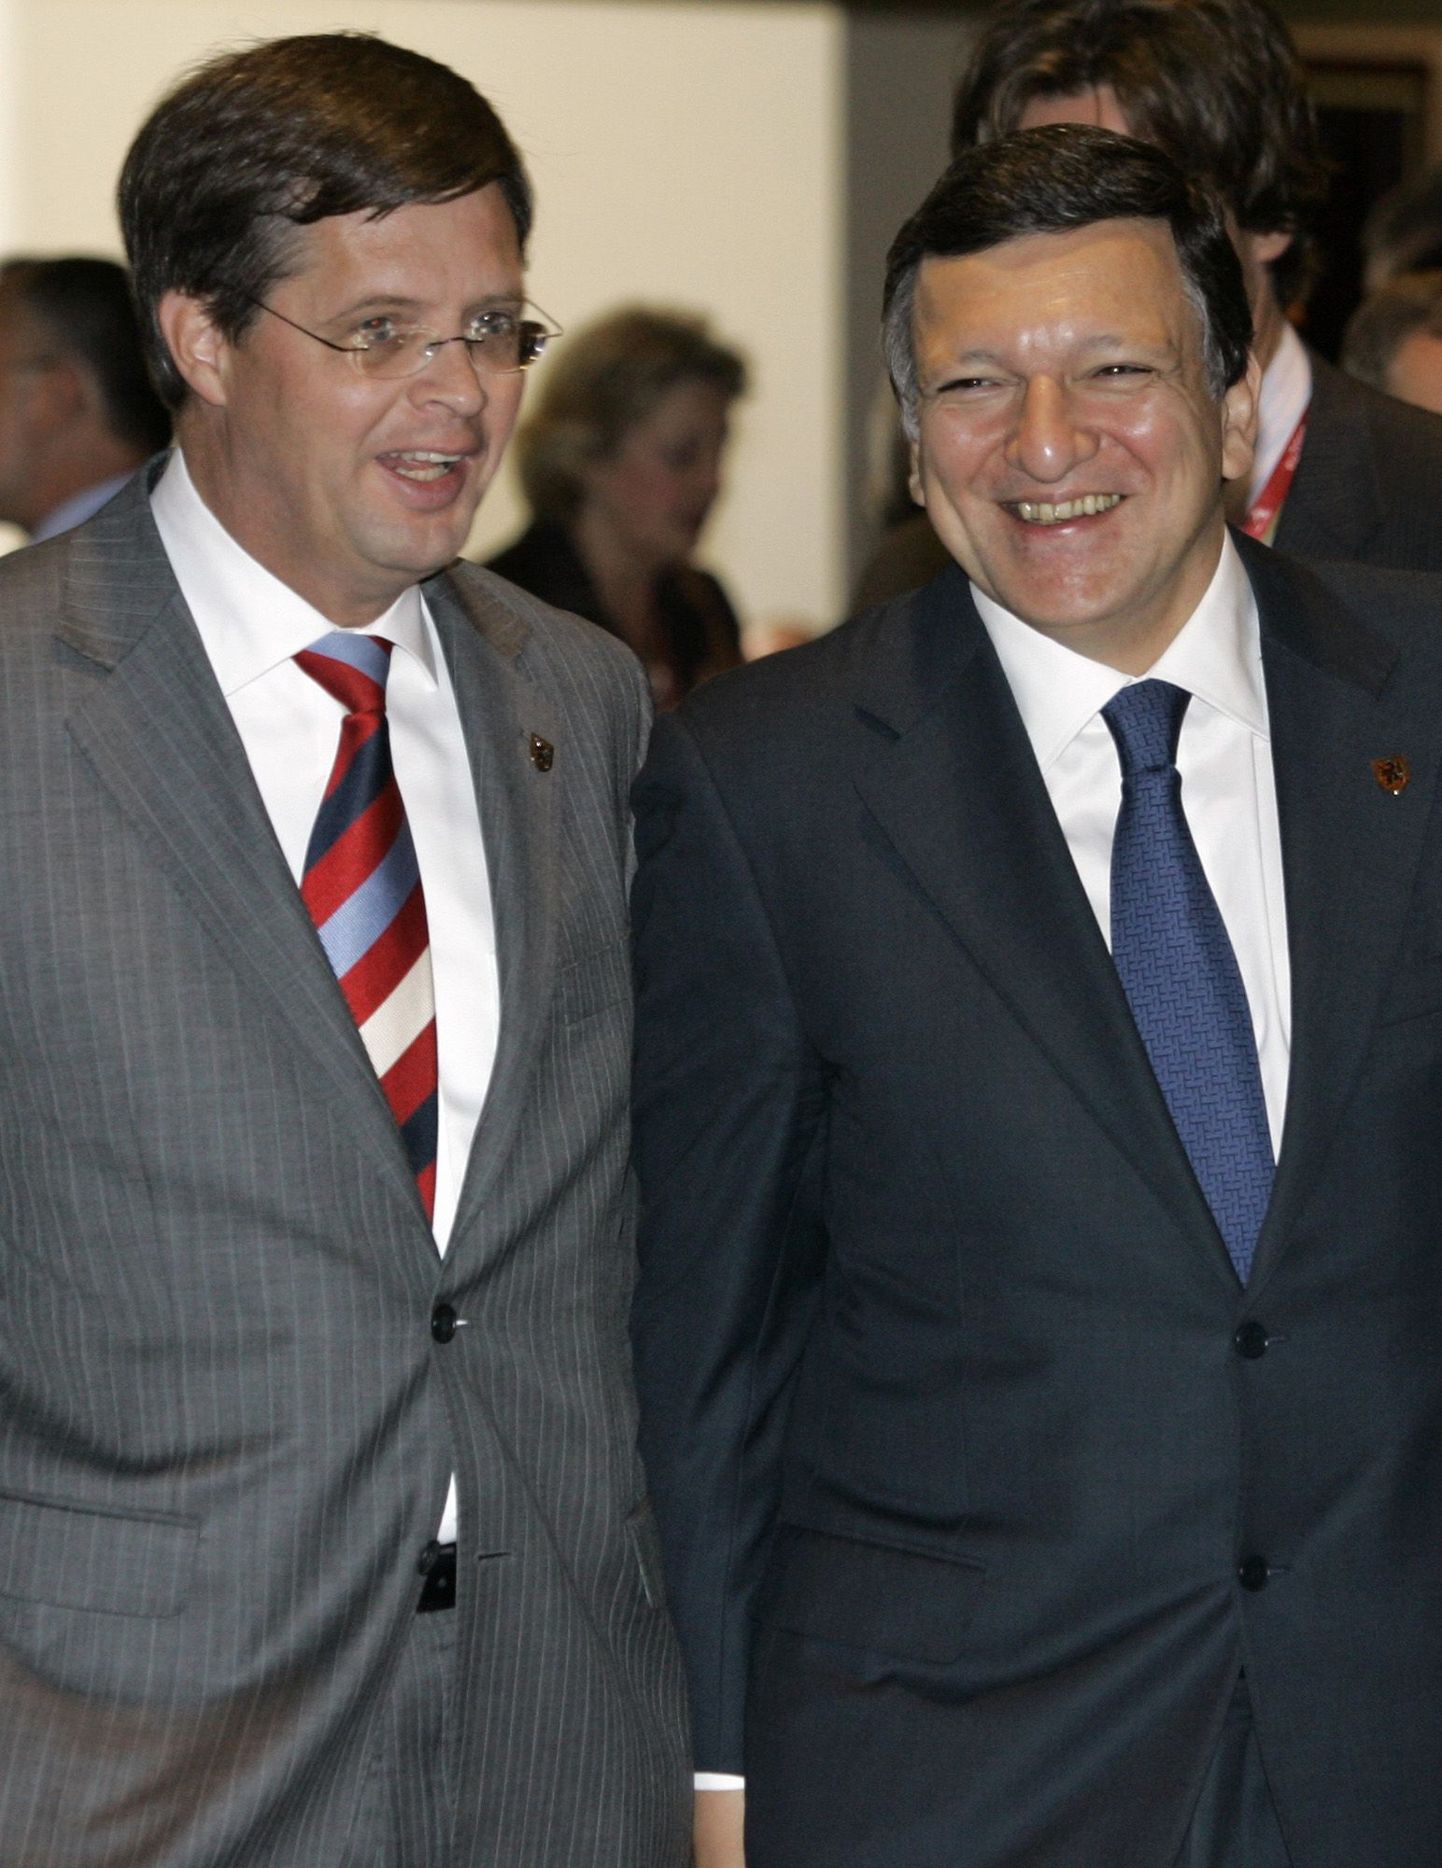 Hollandi peaminister Jan-Peter Balkenende koos Euroopa Komisjoni presidendi Jose Manuel Barrosoga.